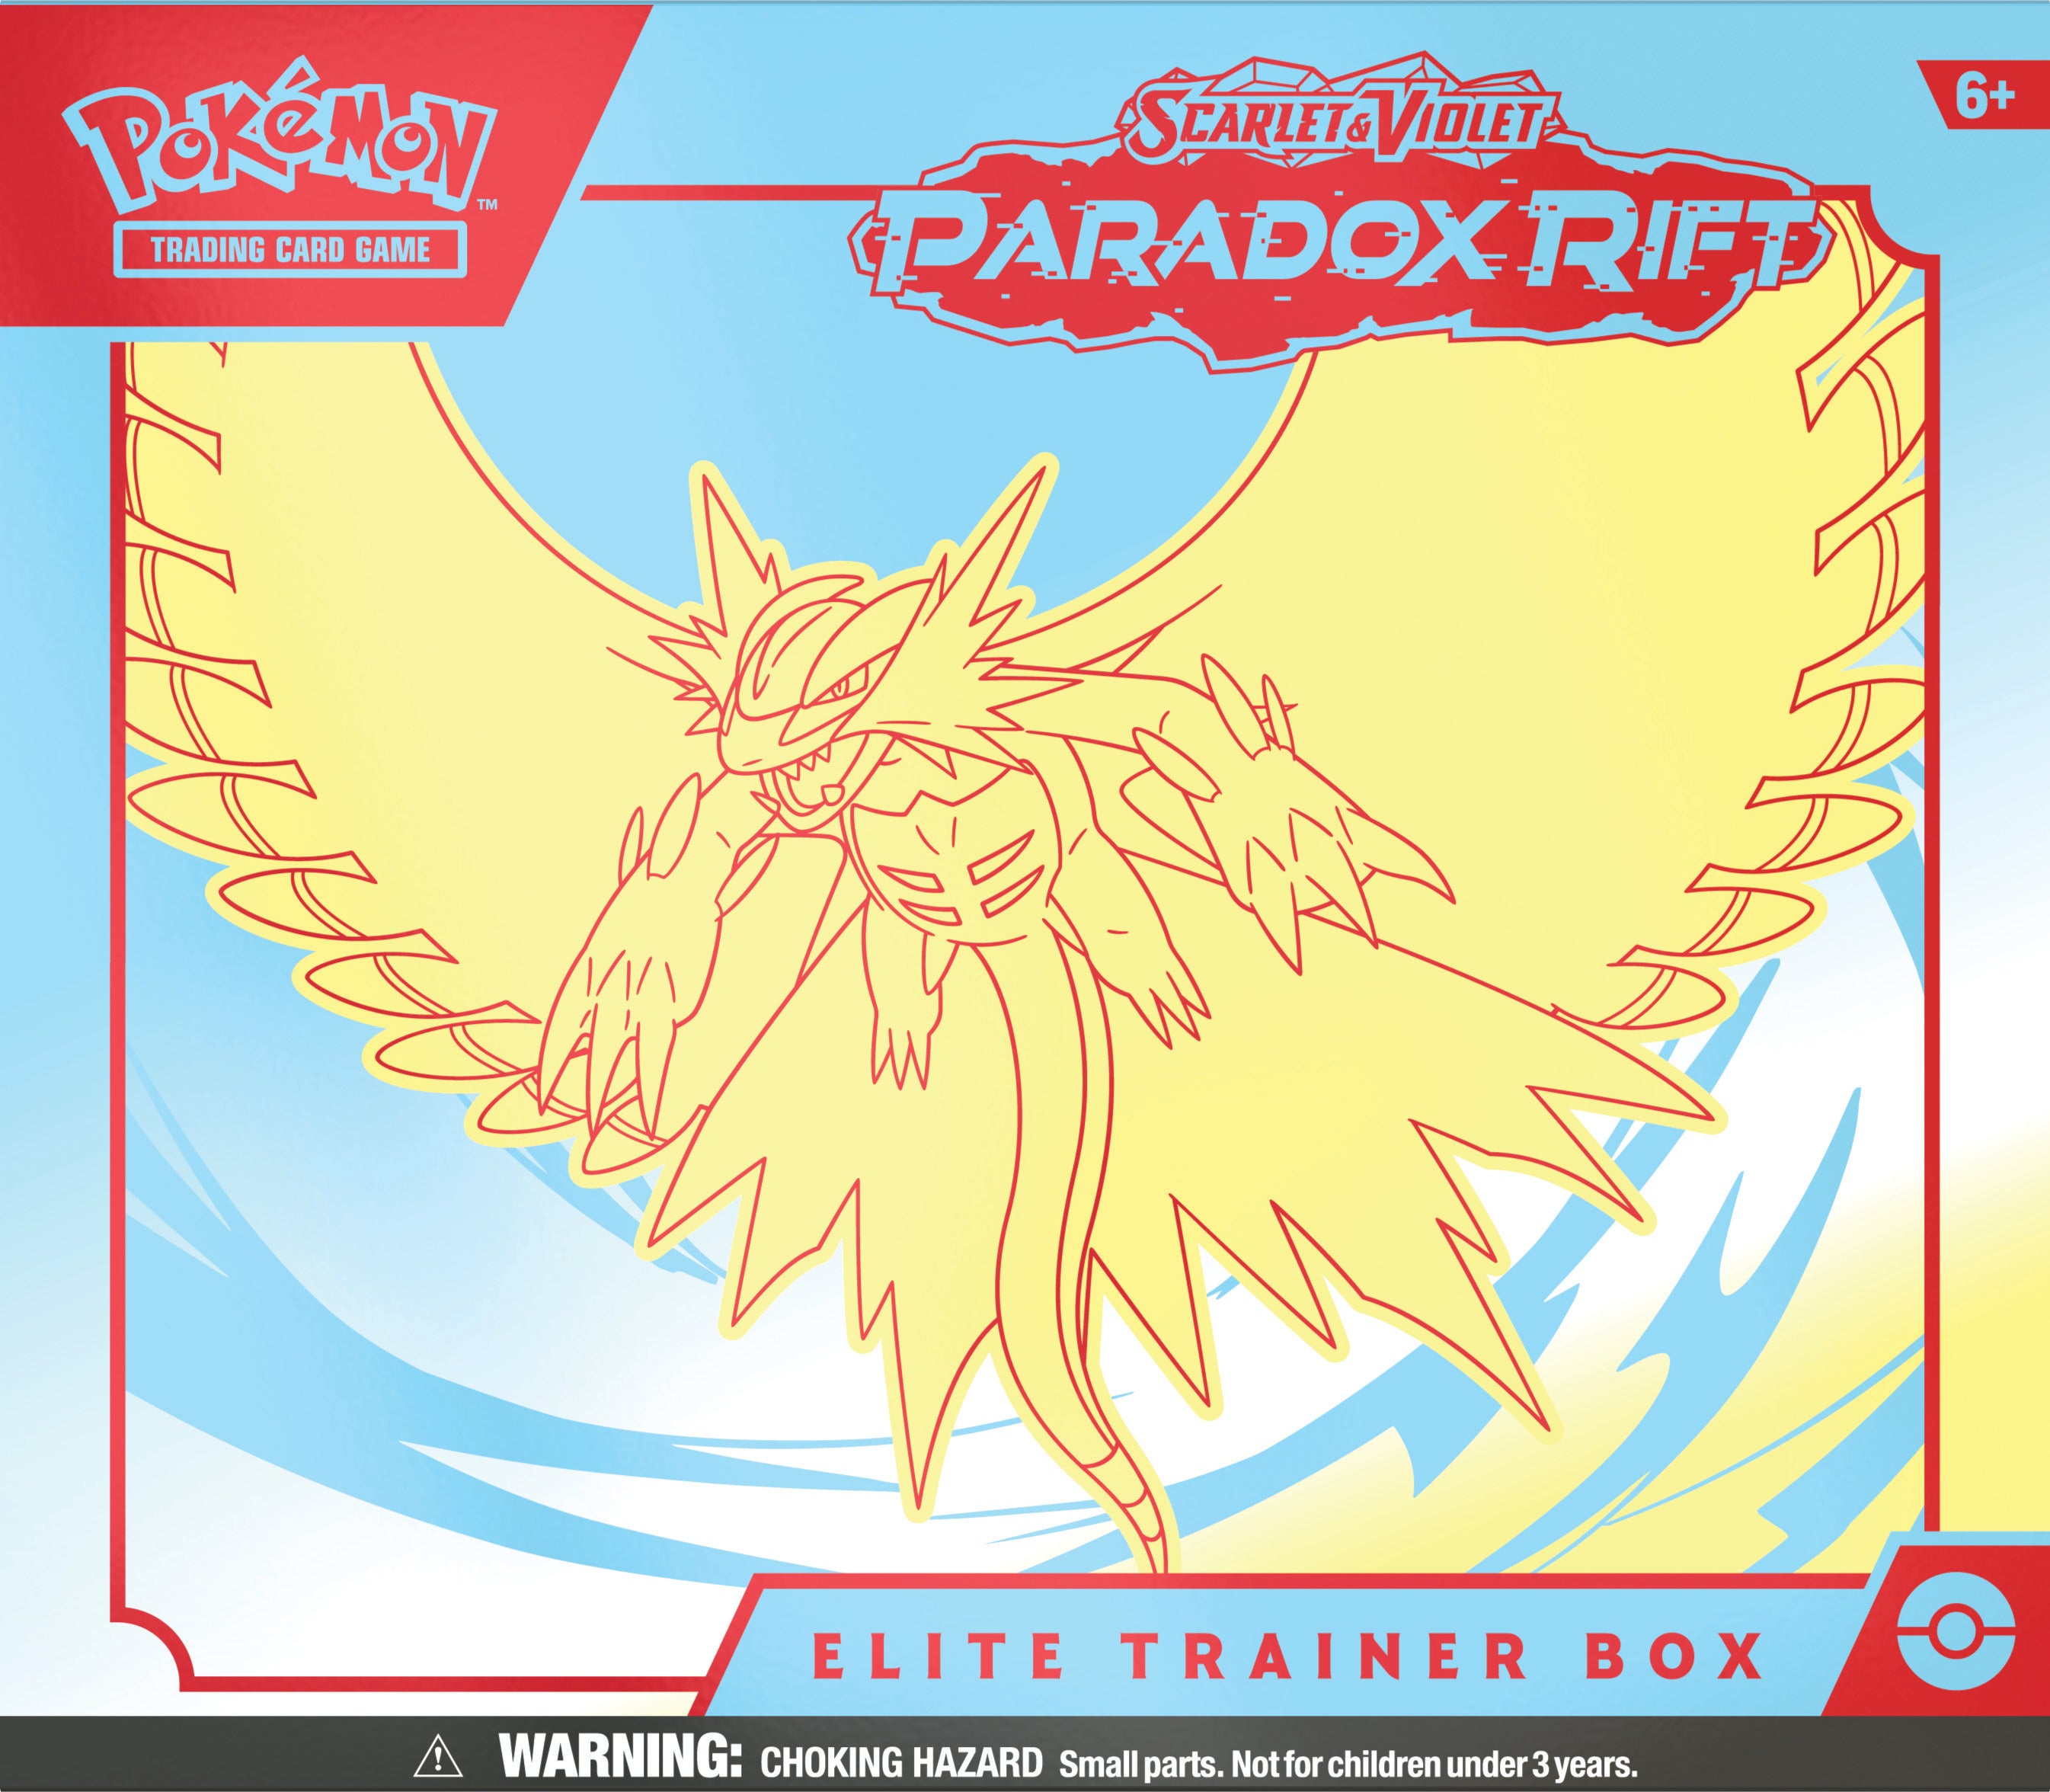 Pokemon TCG Scarlet & Violet: Paradox Rift - Elite Trainer Box Roaring Moon en Ingles